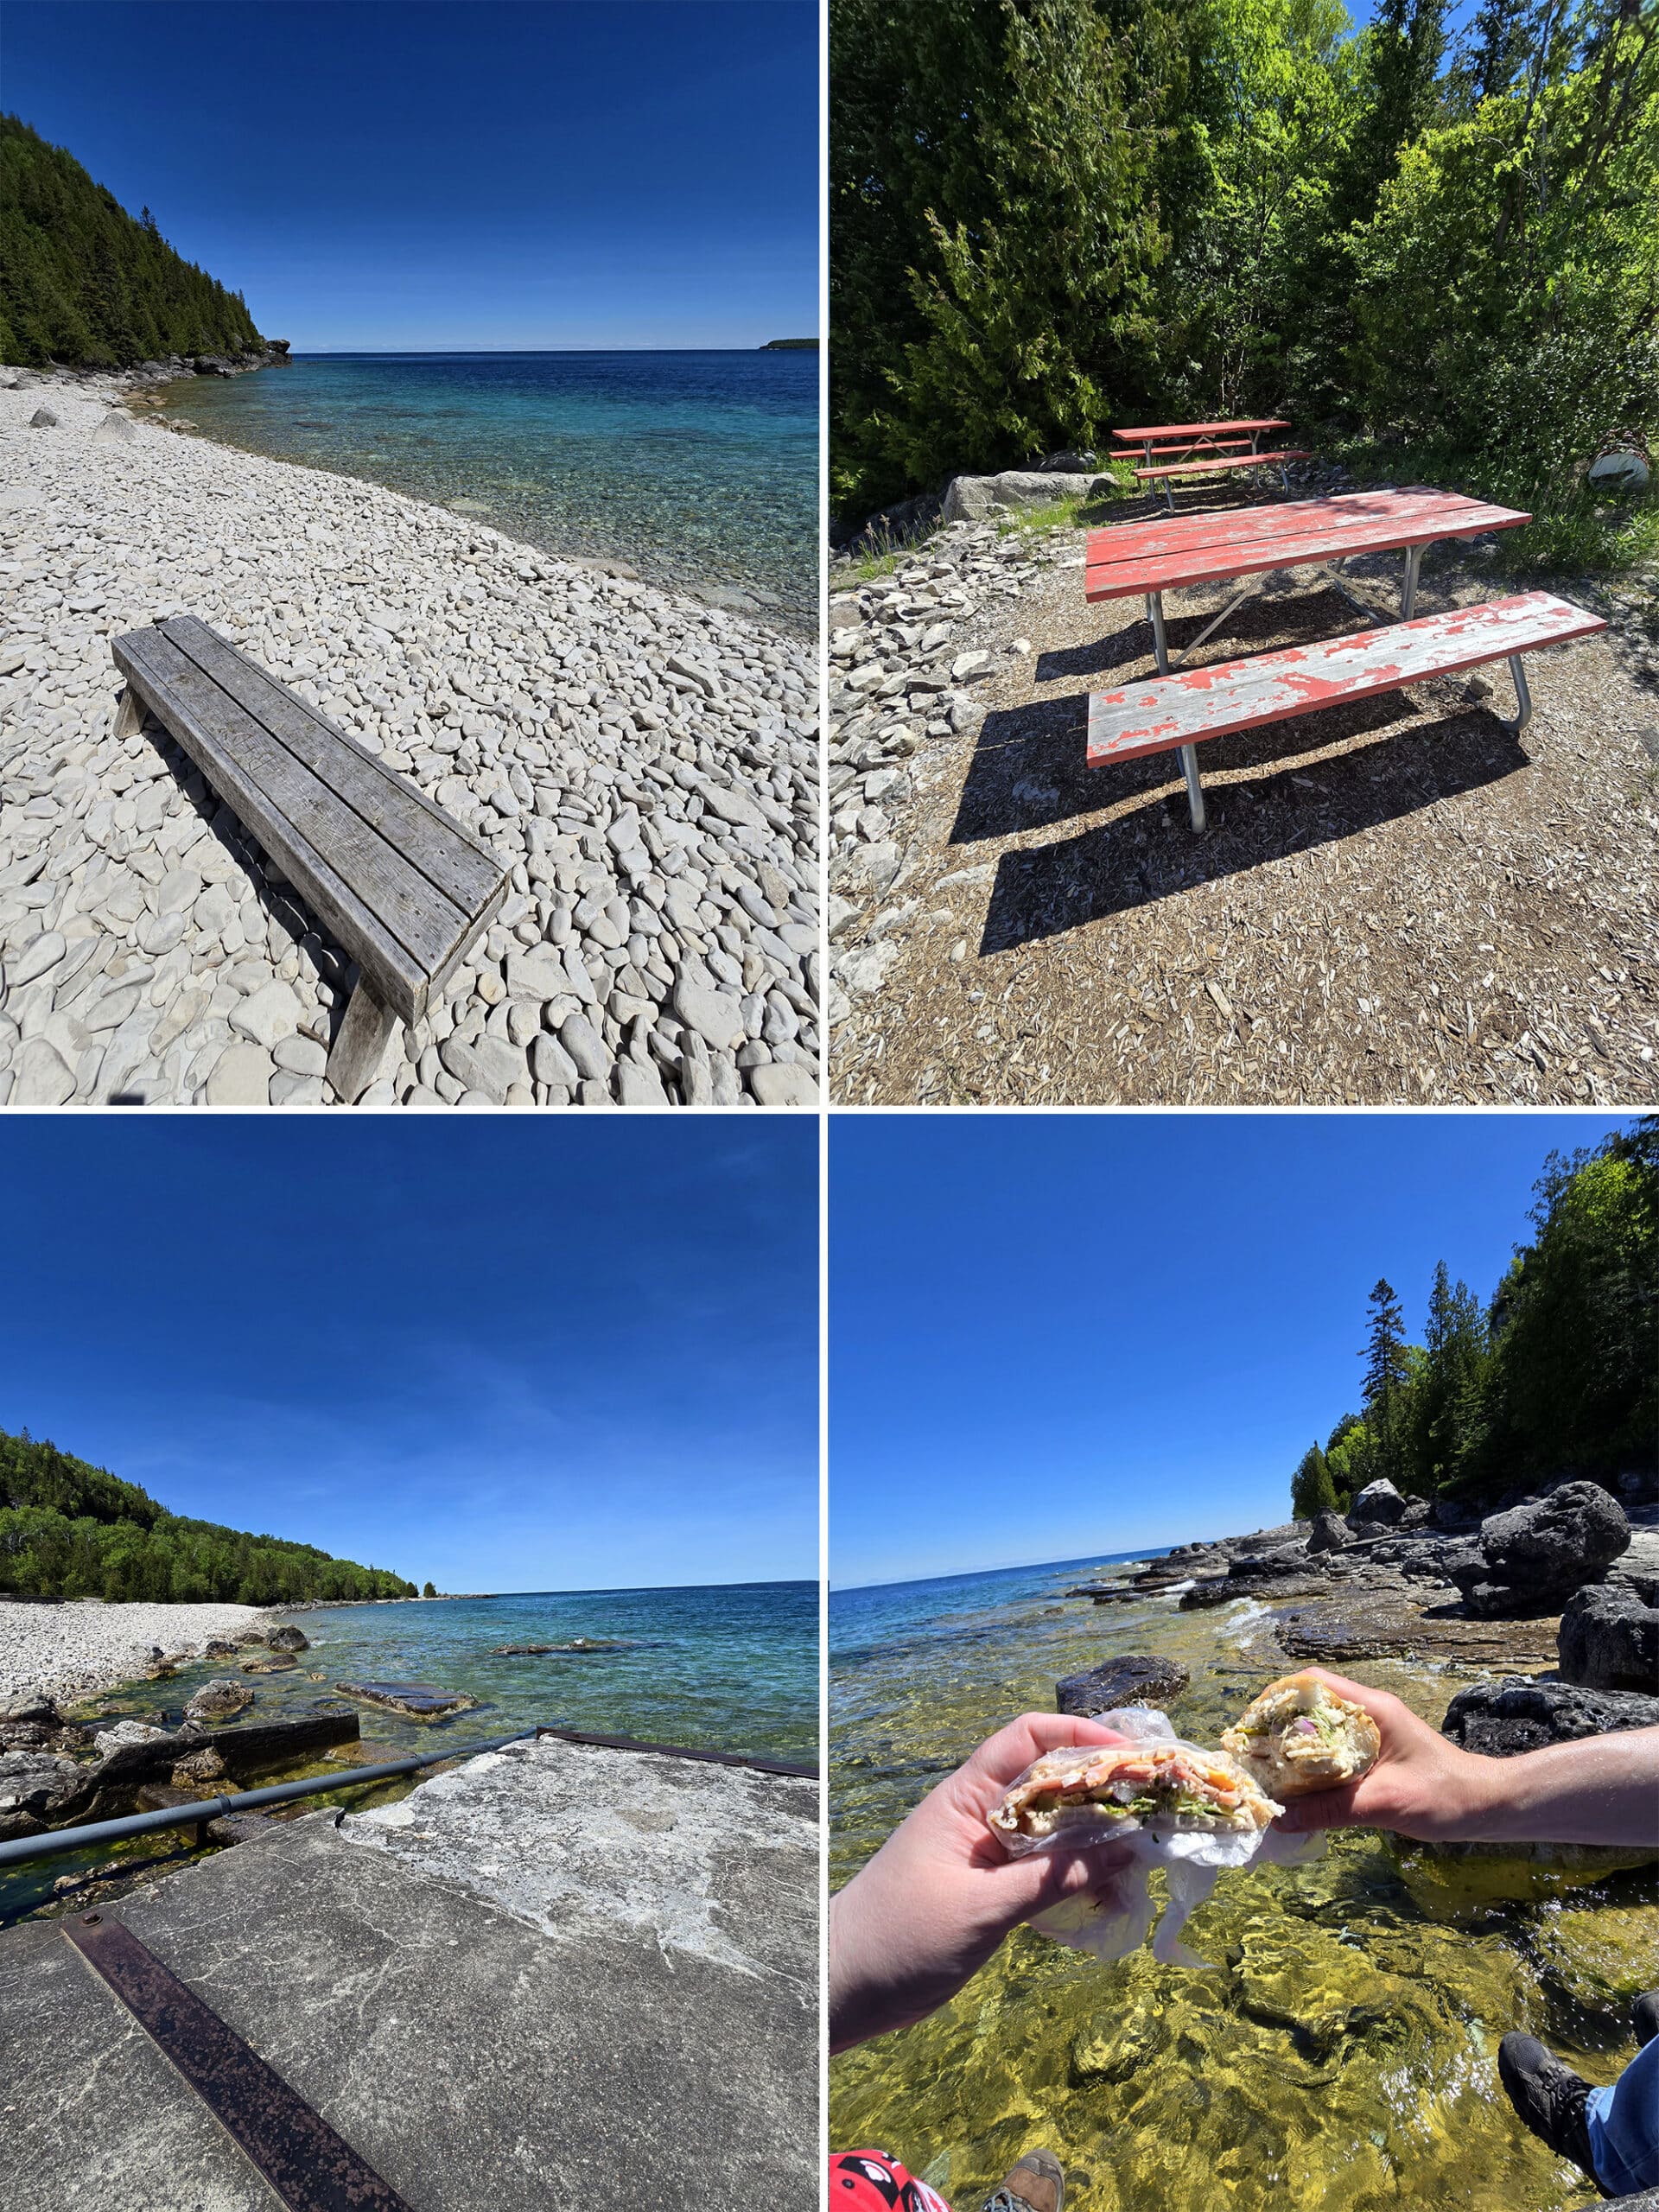 4 part image showing various picnic spots on Flowerpot Island.